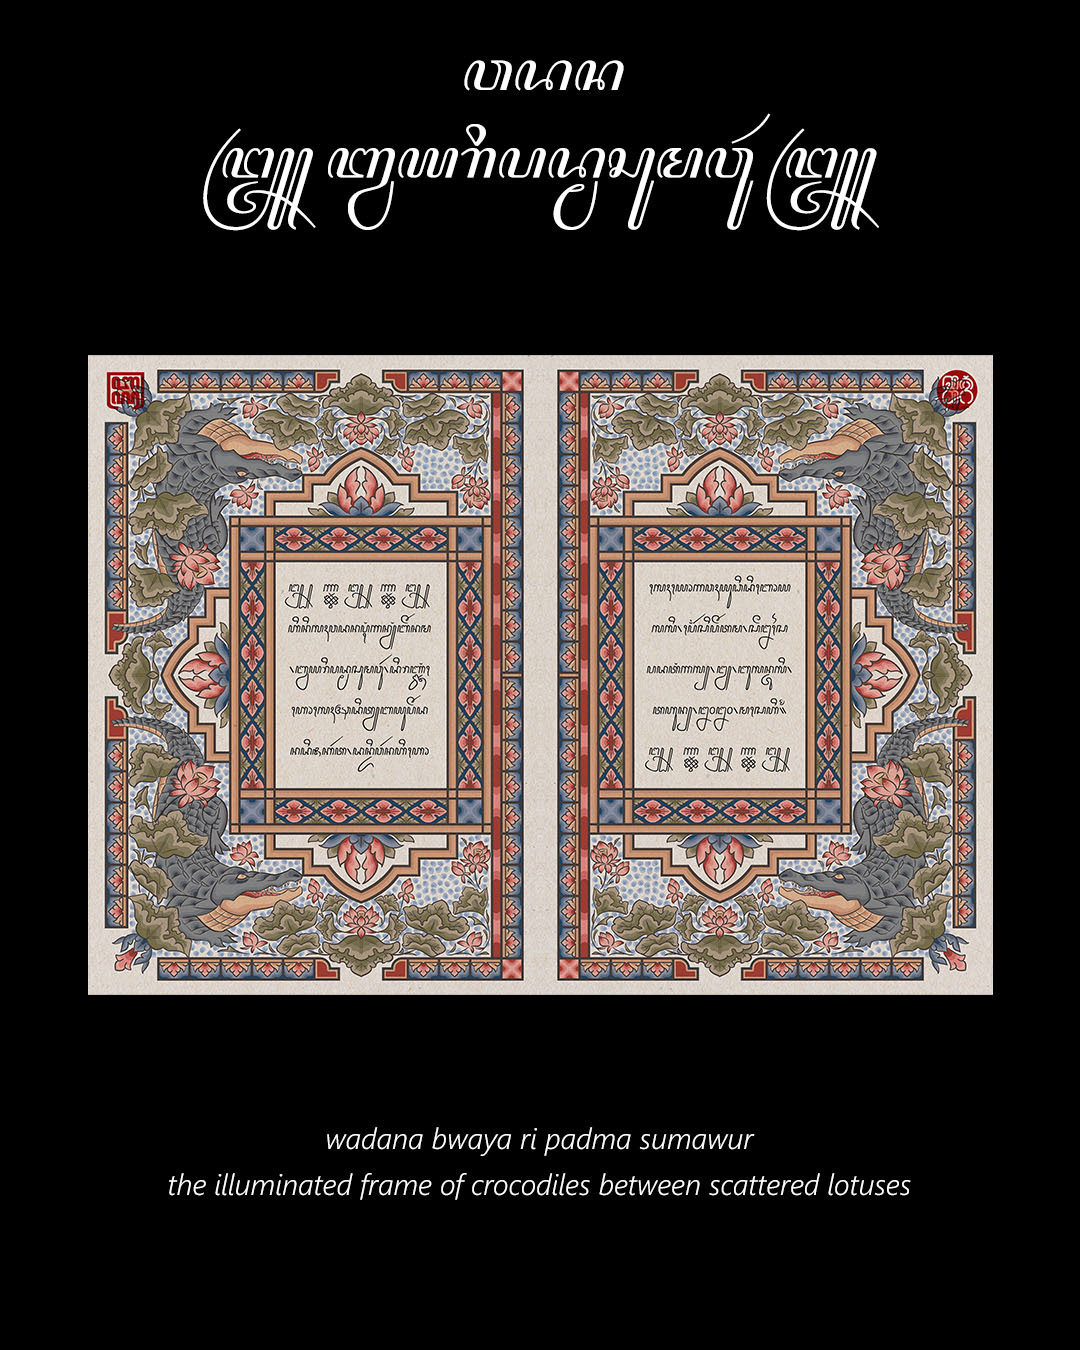 aksara illuminated javanese Jawa manuscript Naskah wadana